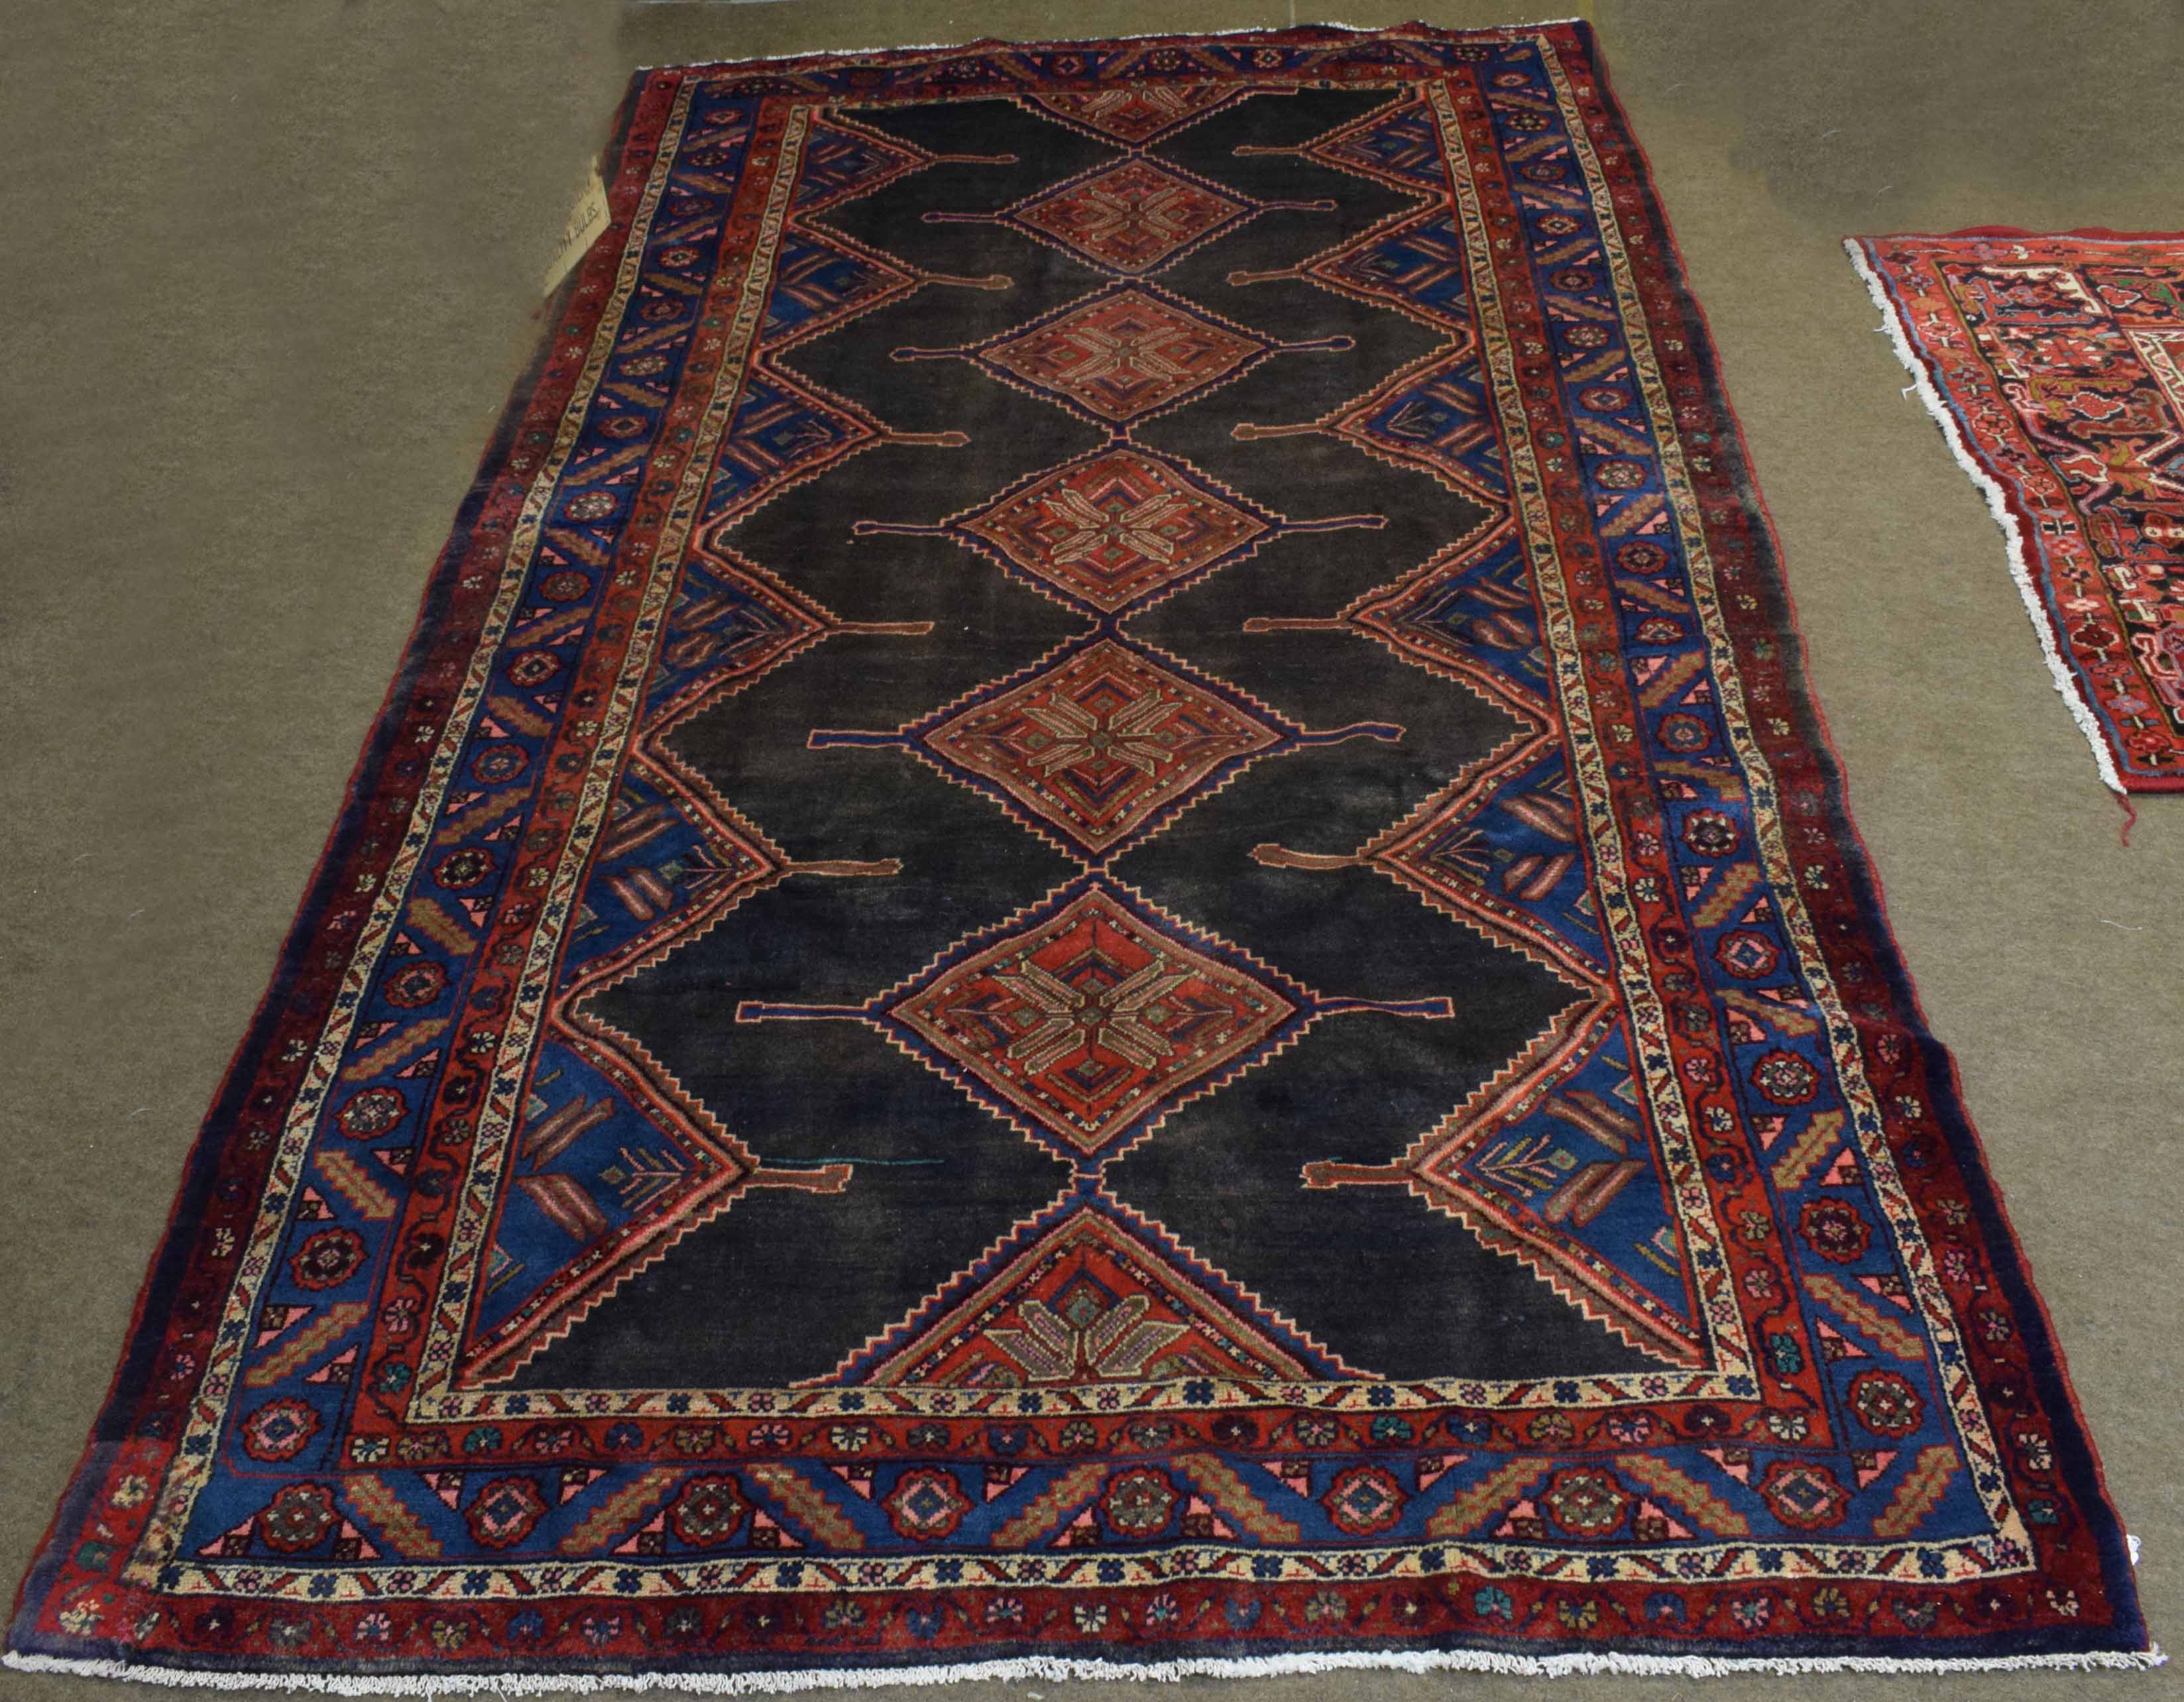 Araak carpet, 2.82m x 1.65m